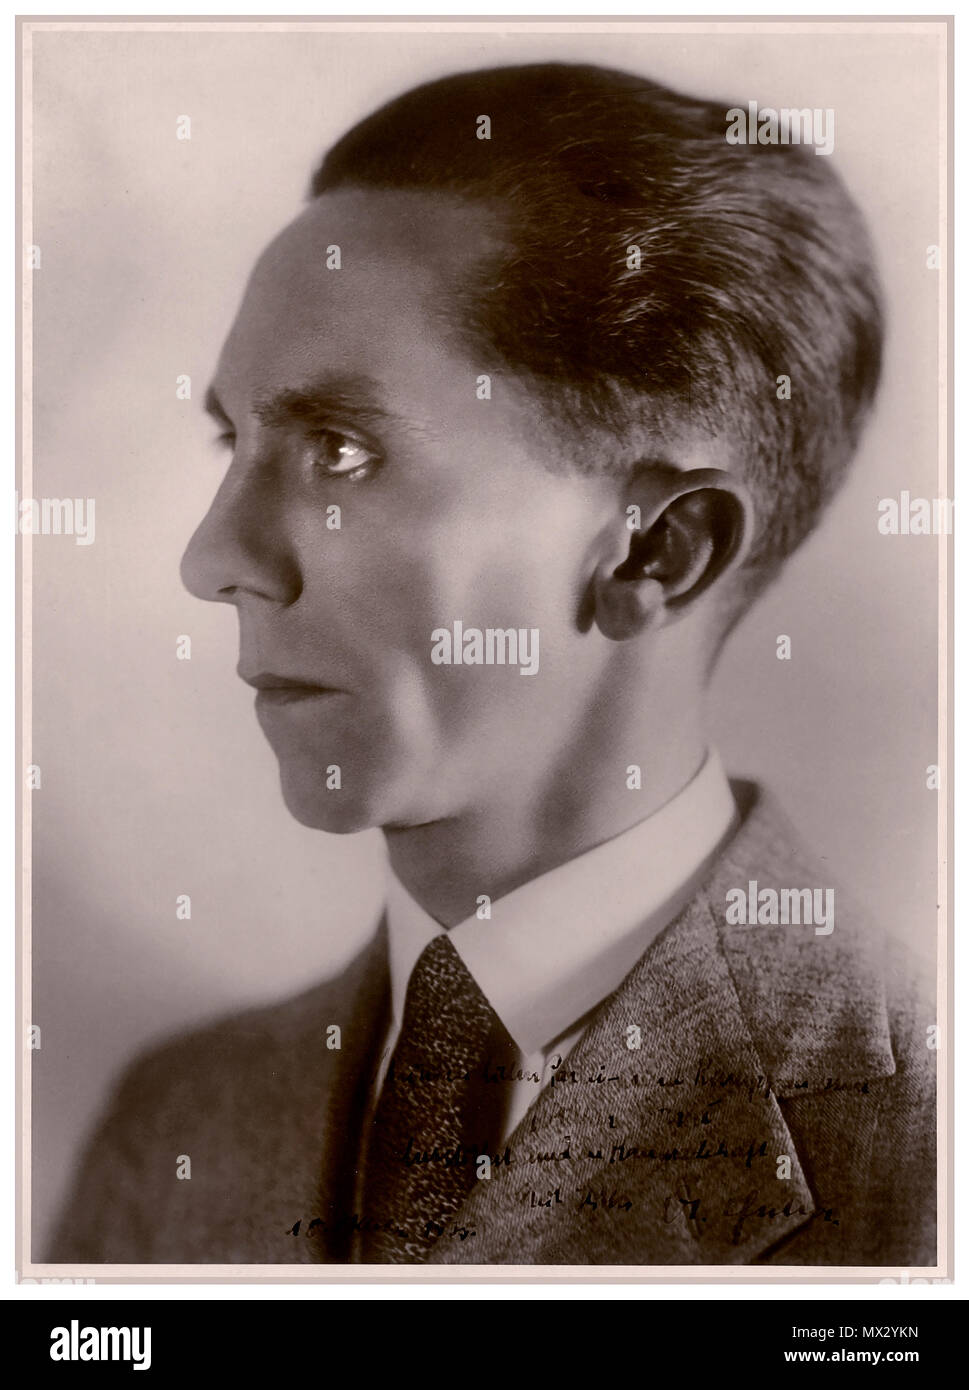 Vintage portrait JOSEPH GOEBBELS NAZI (1897-1945) German Politician, Reich Minister of Propaganda in Nazi Germany 1933-45. 1935, Stock Photo